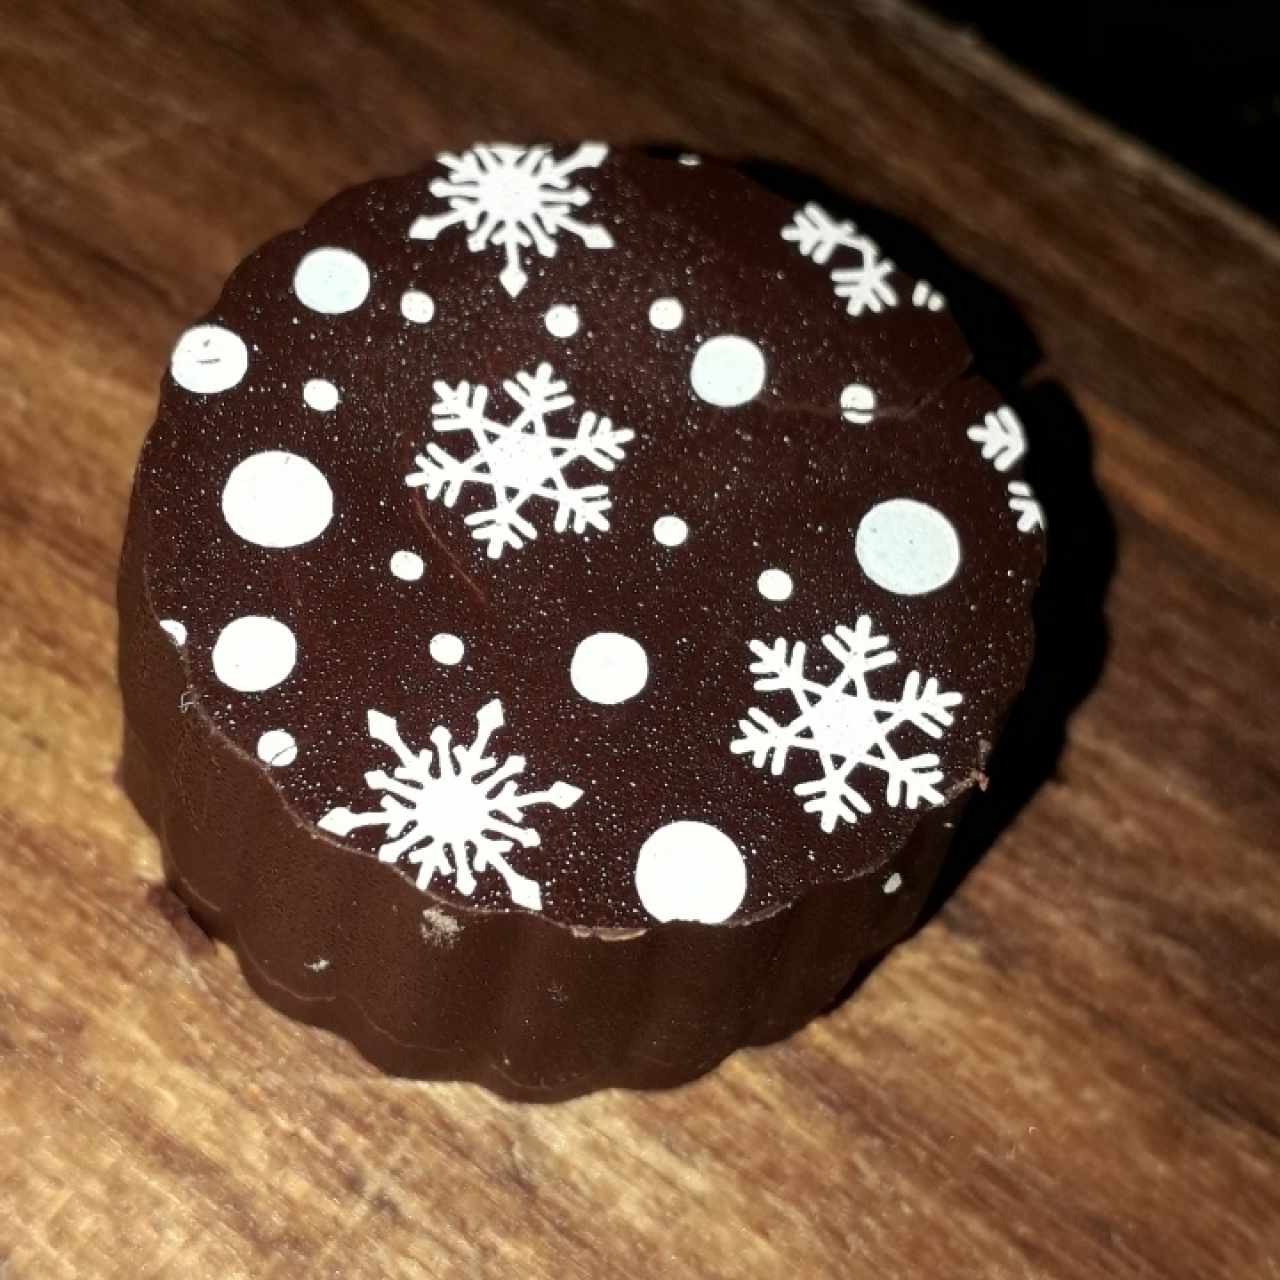 chocolate de menta